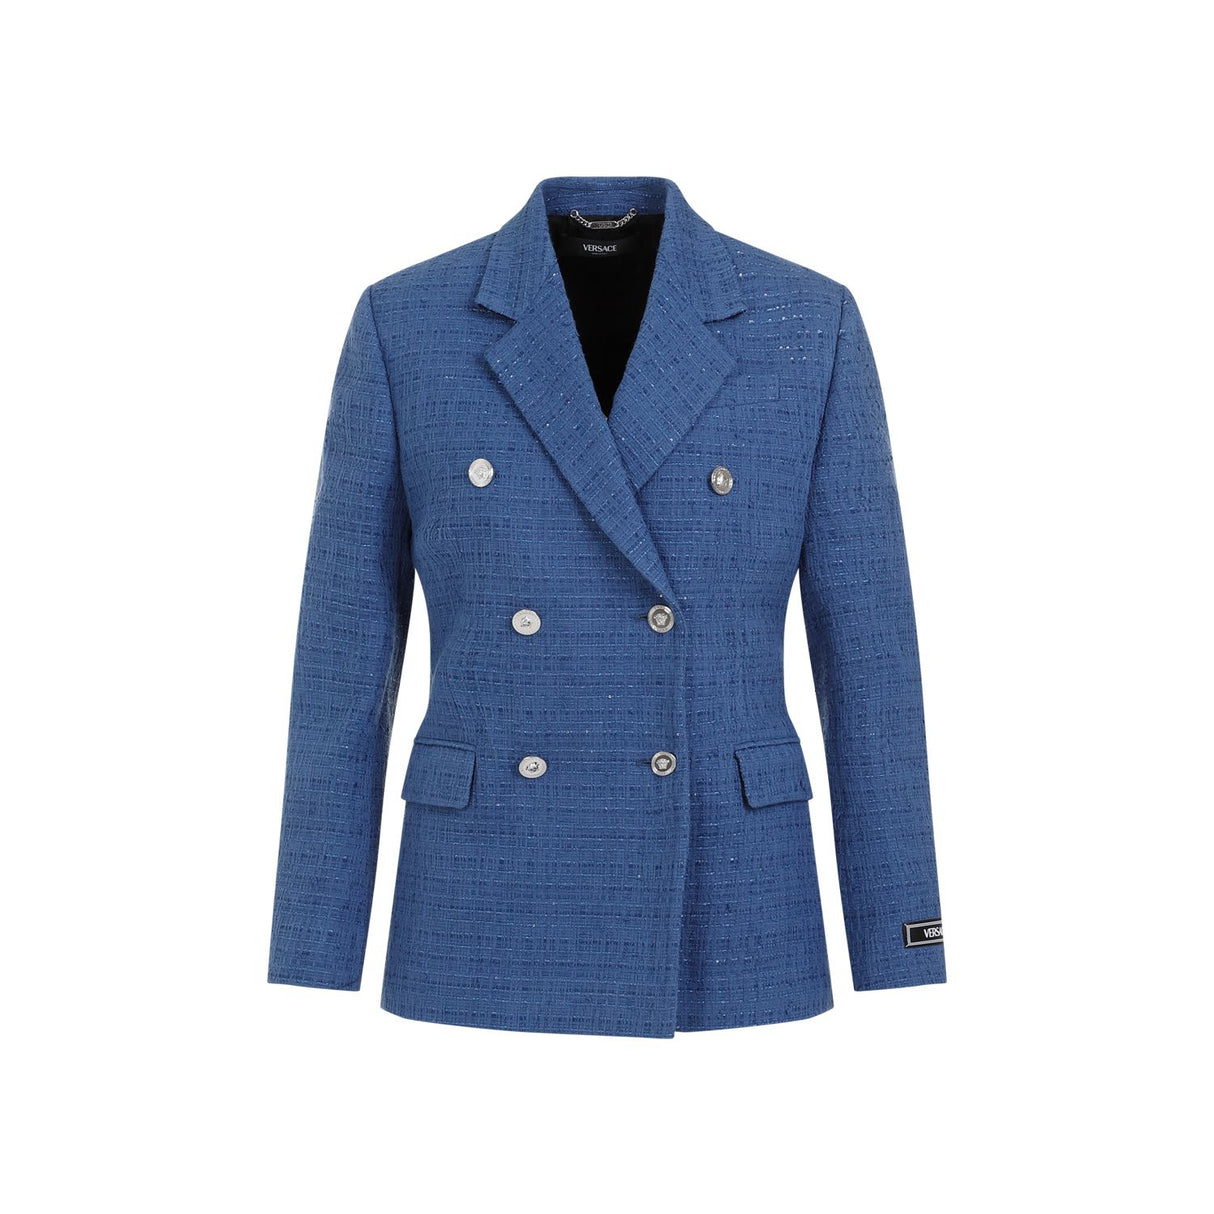 Blue Tweed Jacket for Women